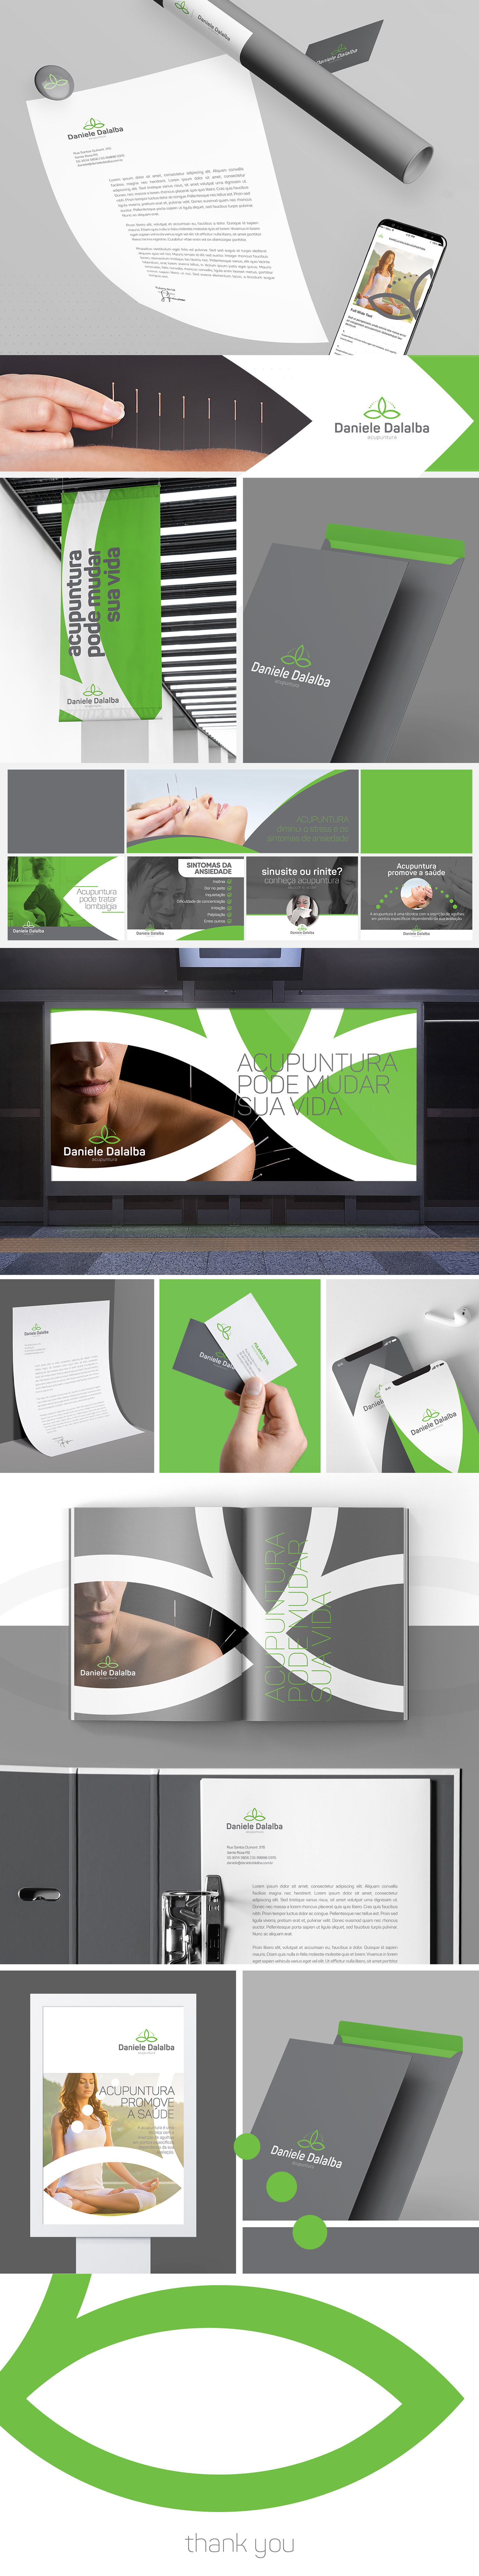 branding  visualidentity Acupuntura marca minimal identidadevisual brand presentation